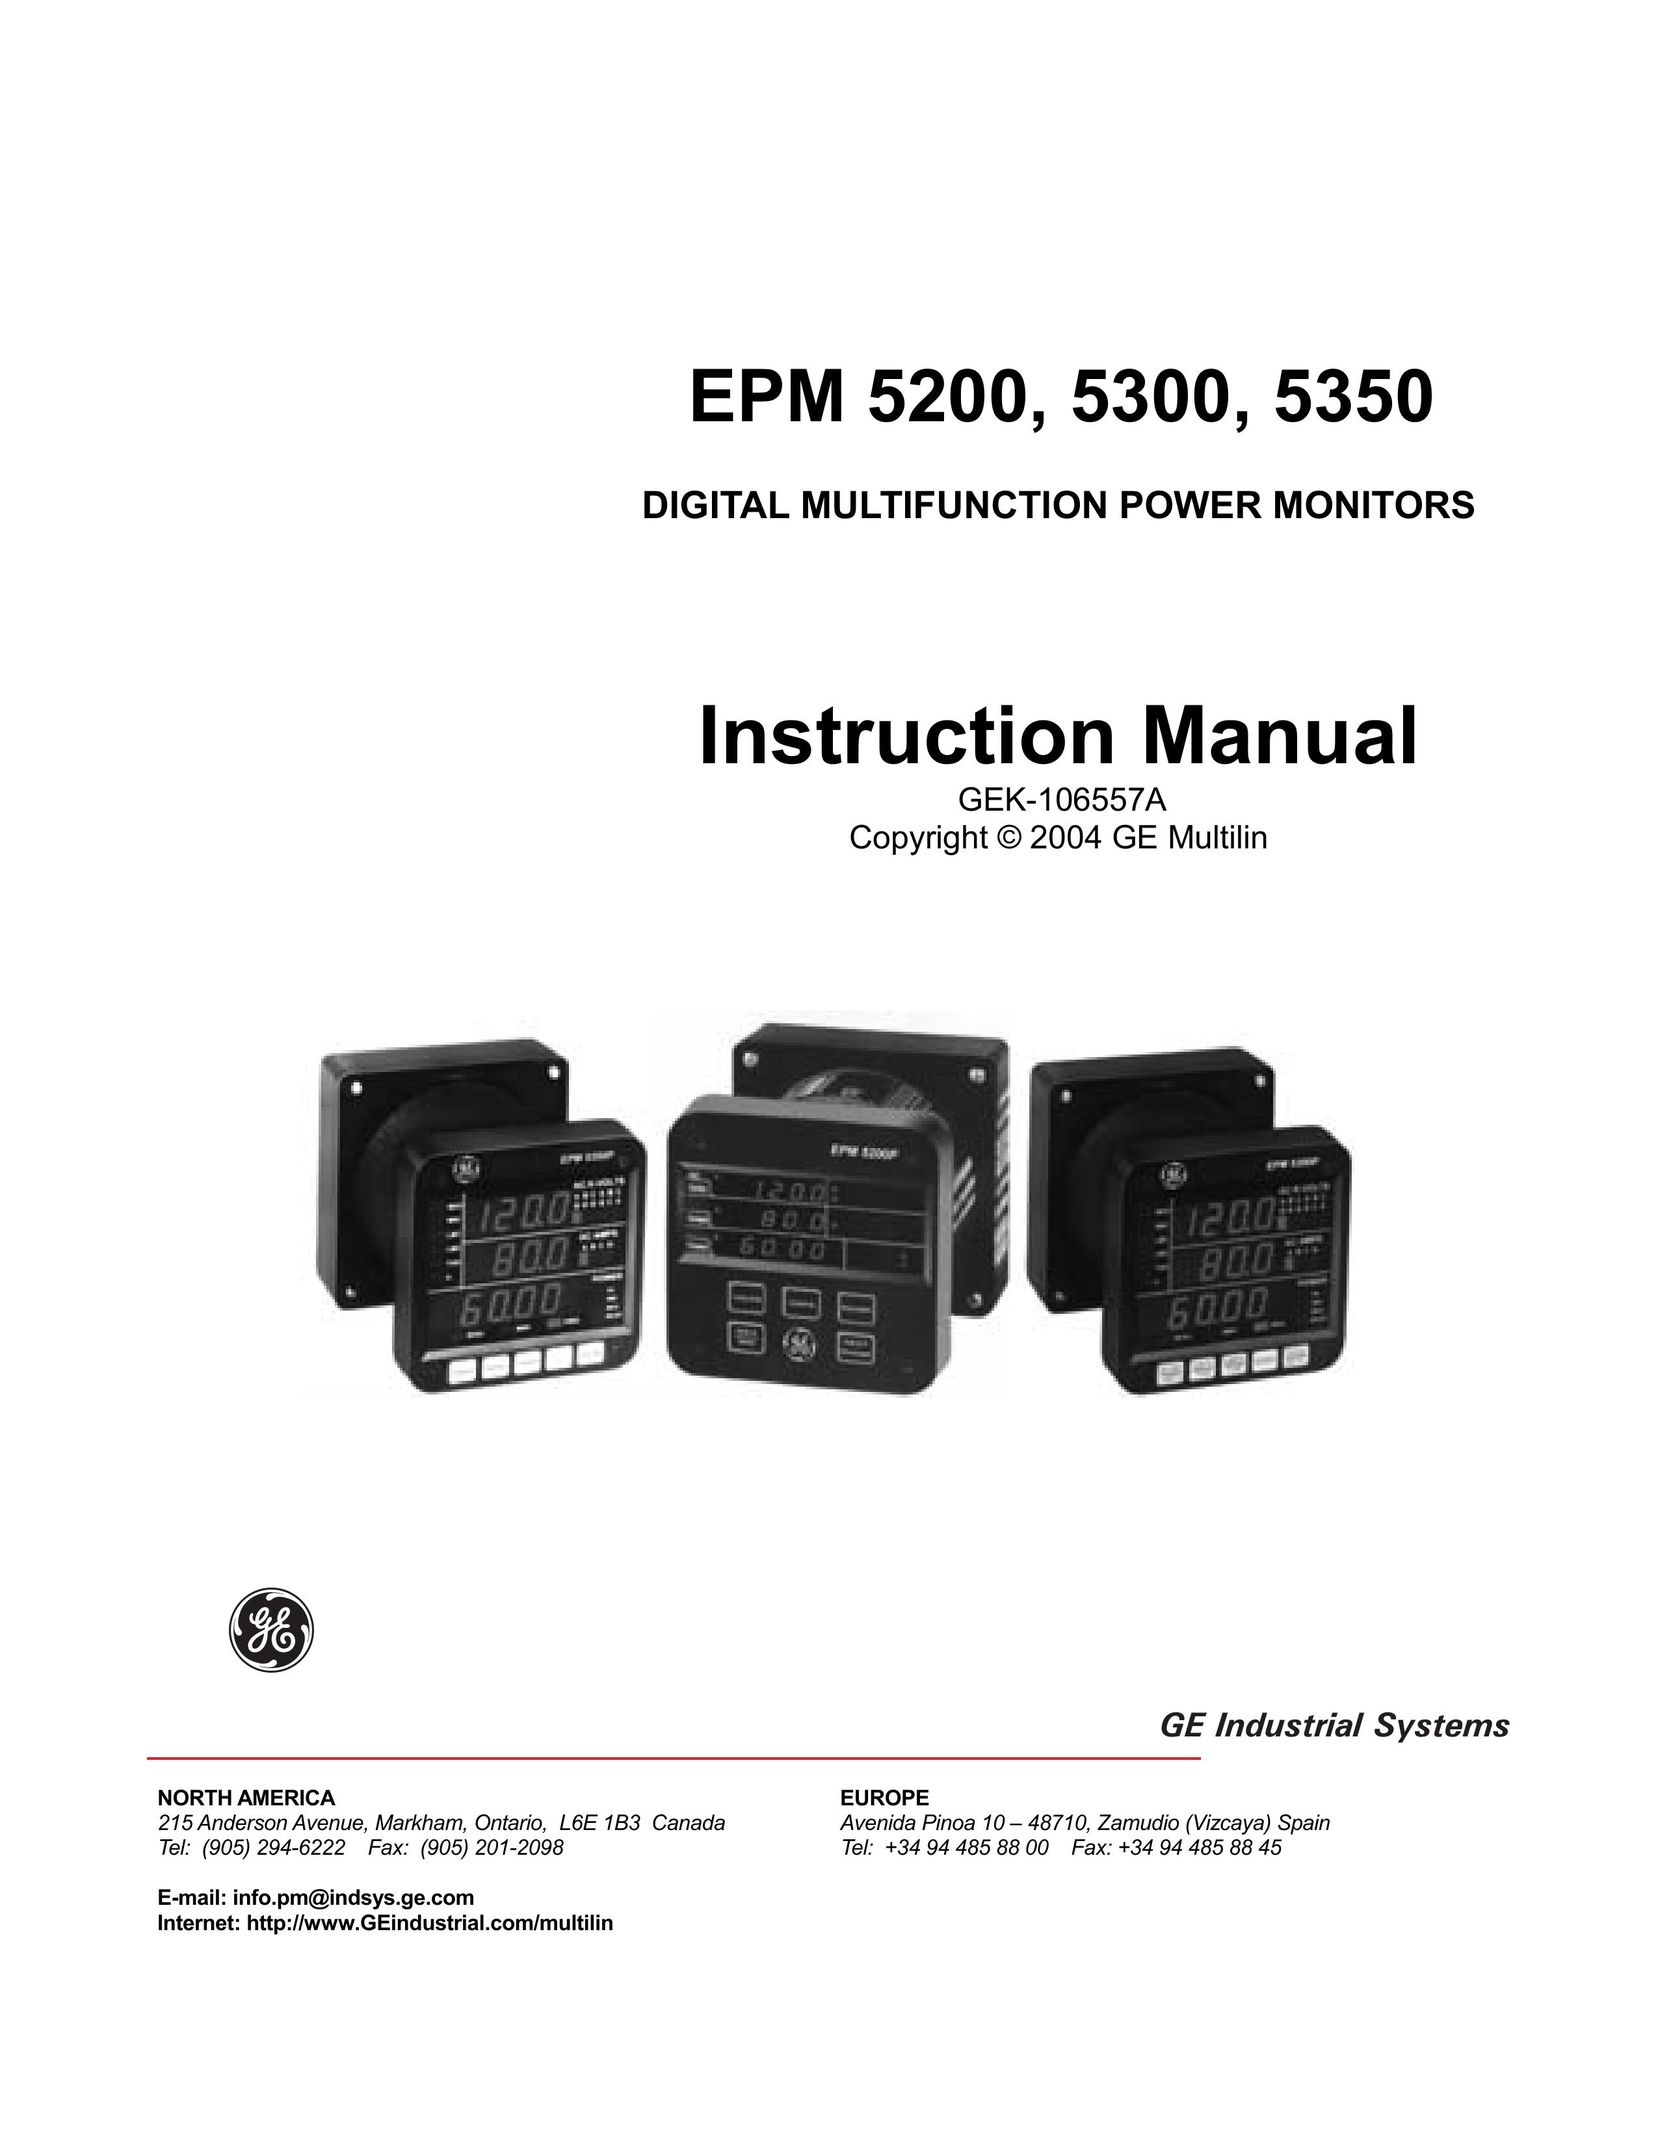 GE EPM 5300 Computer Monitor User Manual